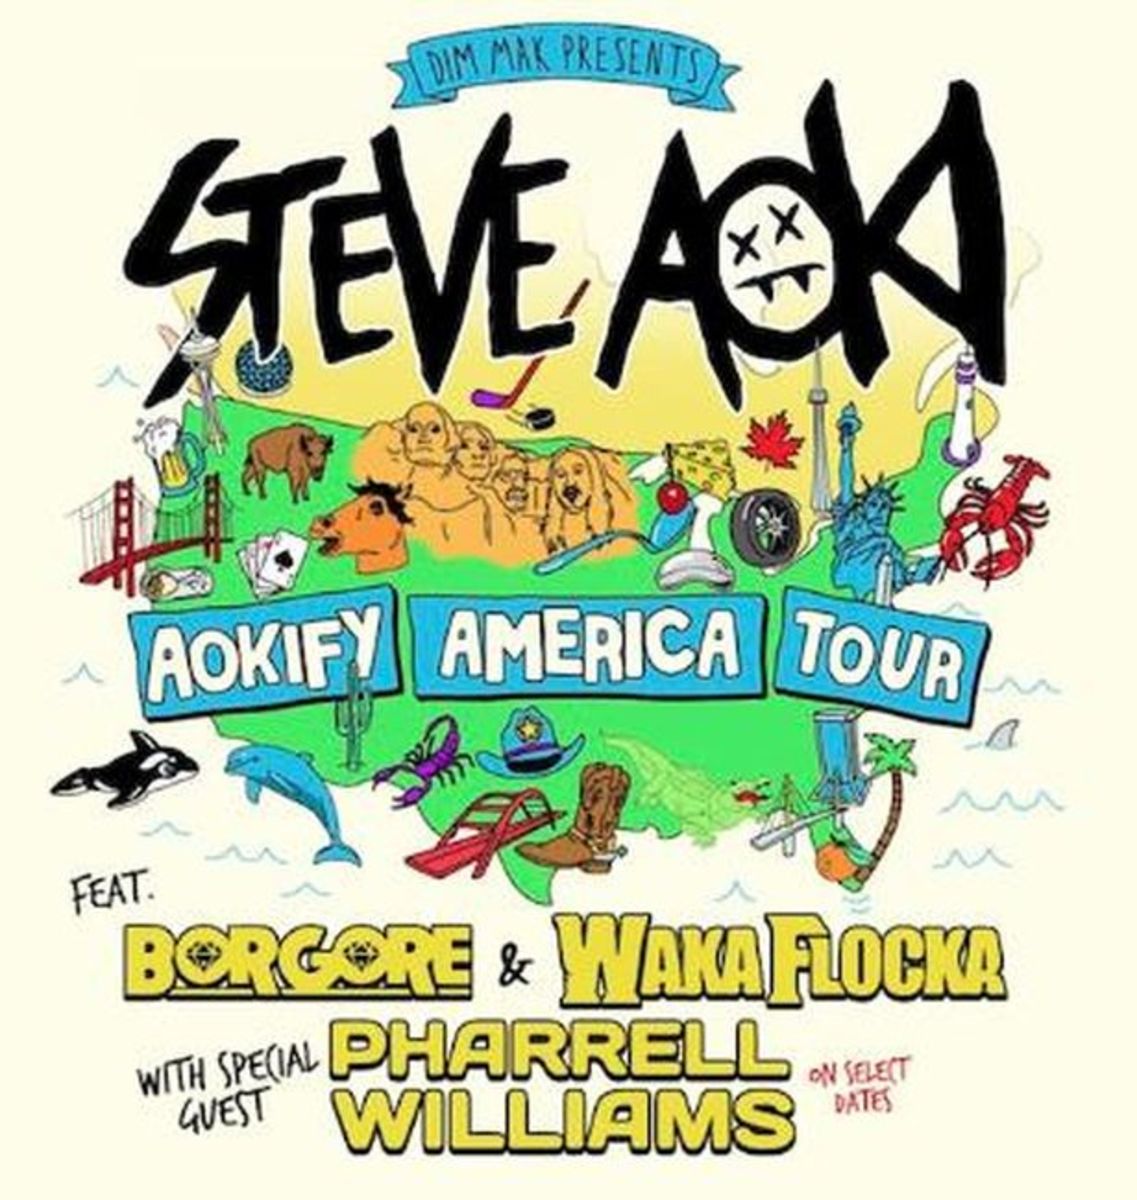 EDM News: Steve Aoki Announces 'Aokify America' Tour with Borgore, Waka Flocka Flame, + Pharrell Williams